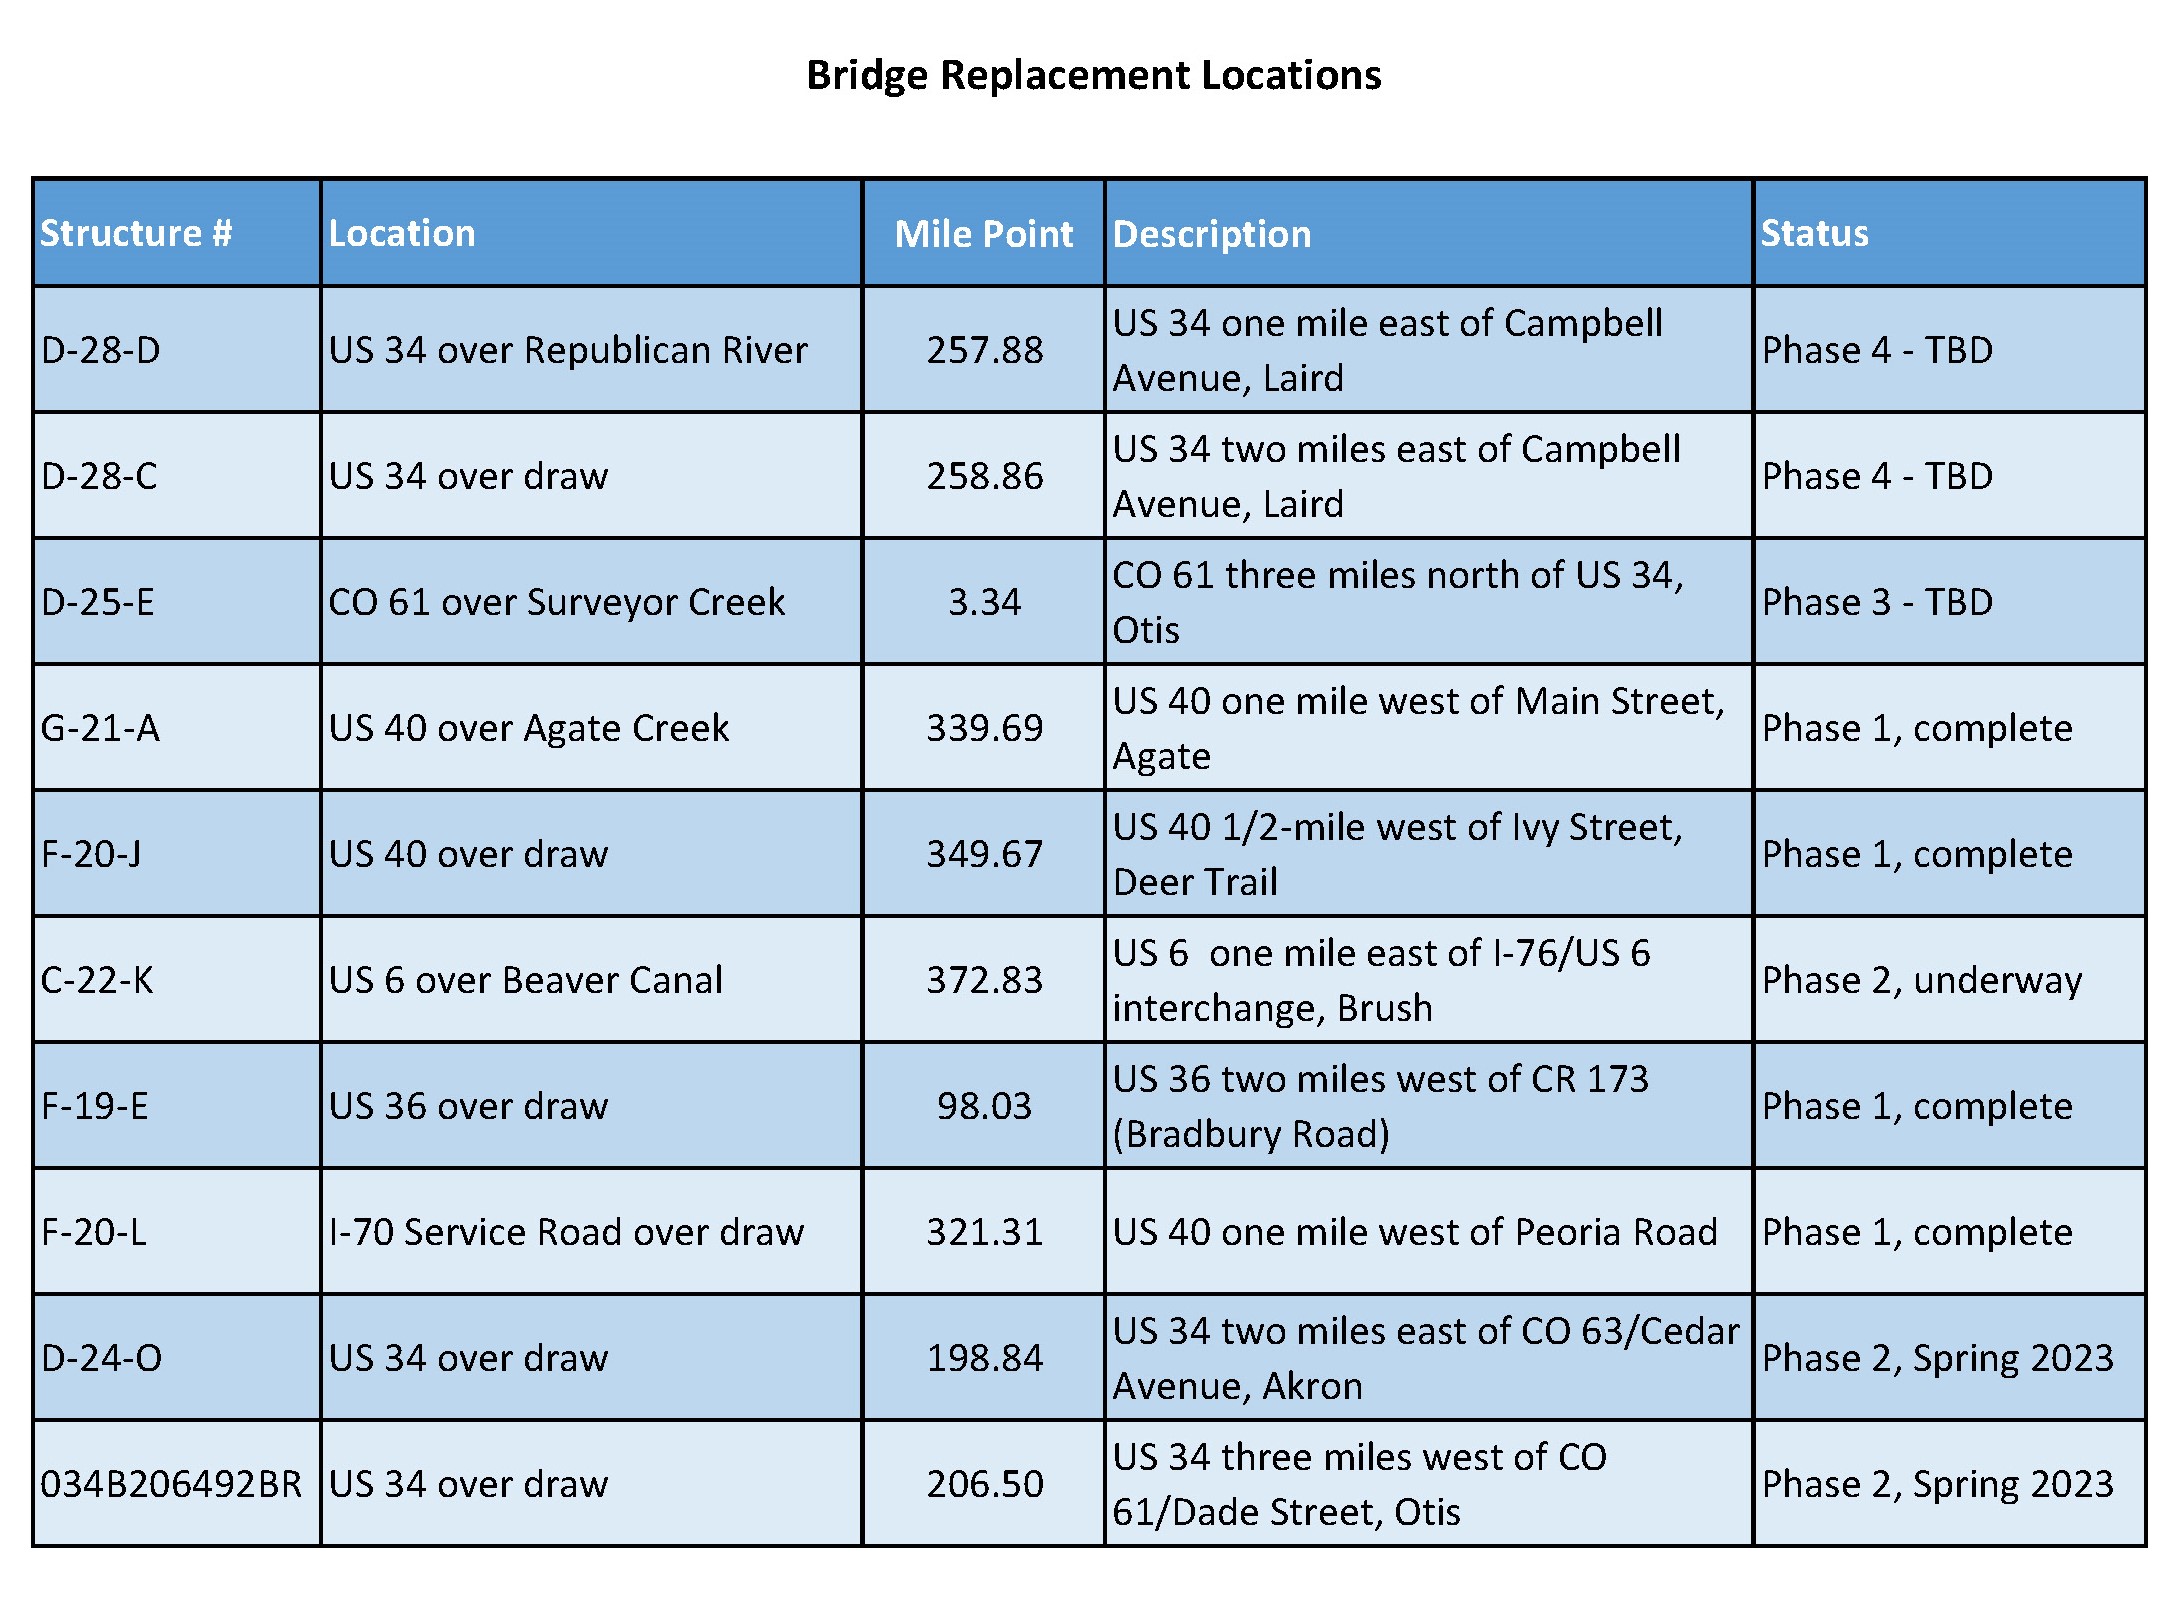 Bridge replacement locations.jpg detail image